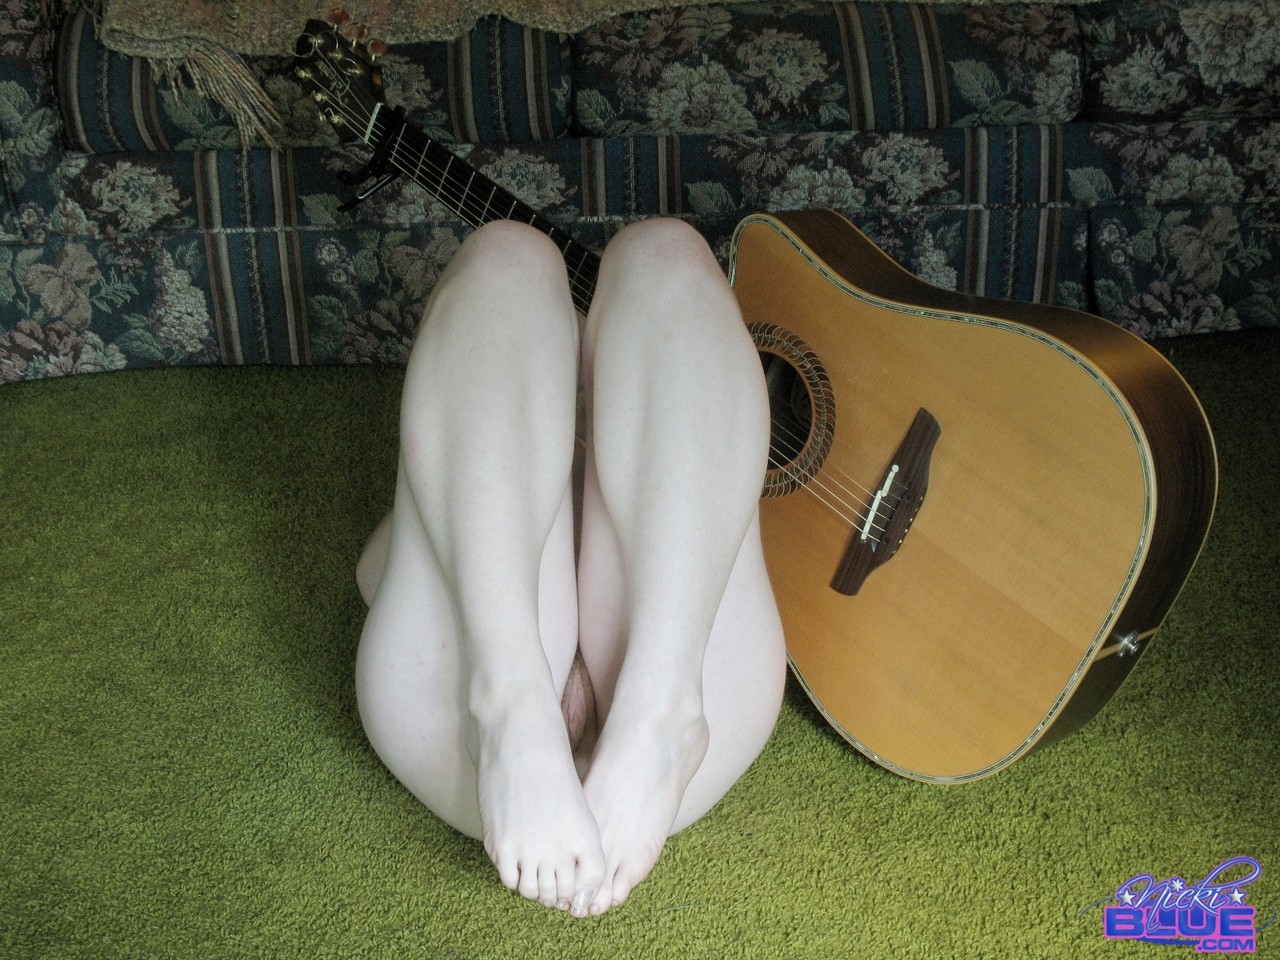 19-year-old babe Nicki Blue posing nude with a guitar in her hands foto porno #424548943 | Pornstar Platinum Pics, Nicki Blue, Redhead, porno móvil